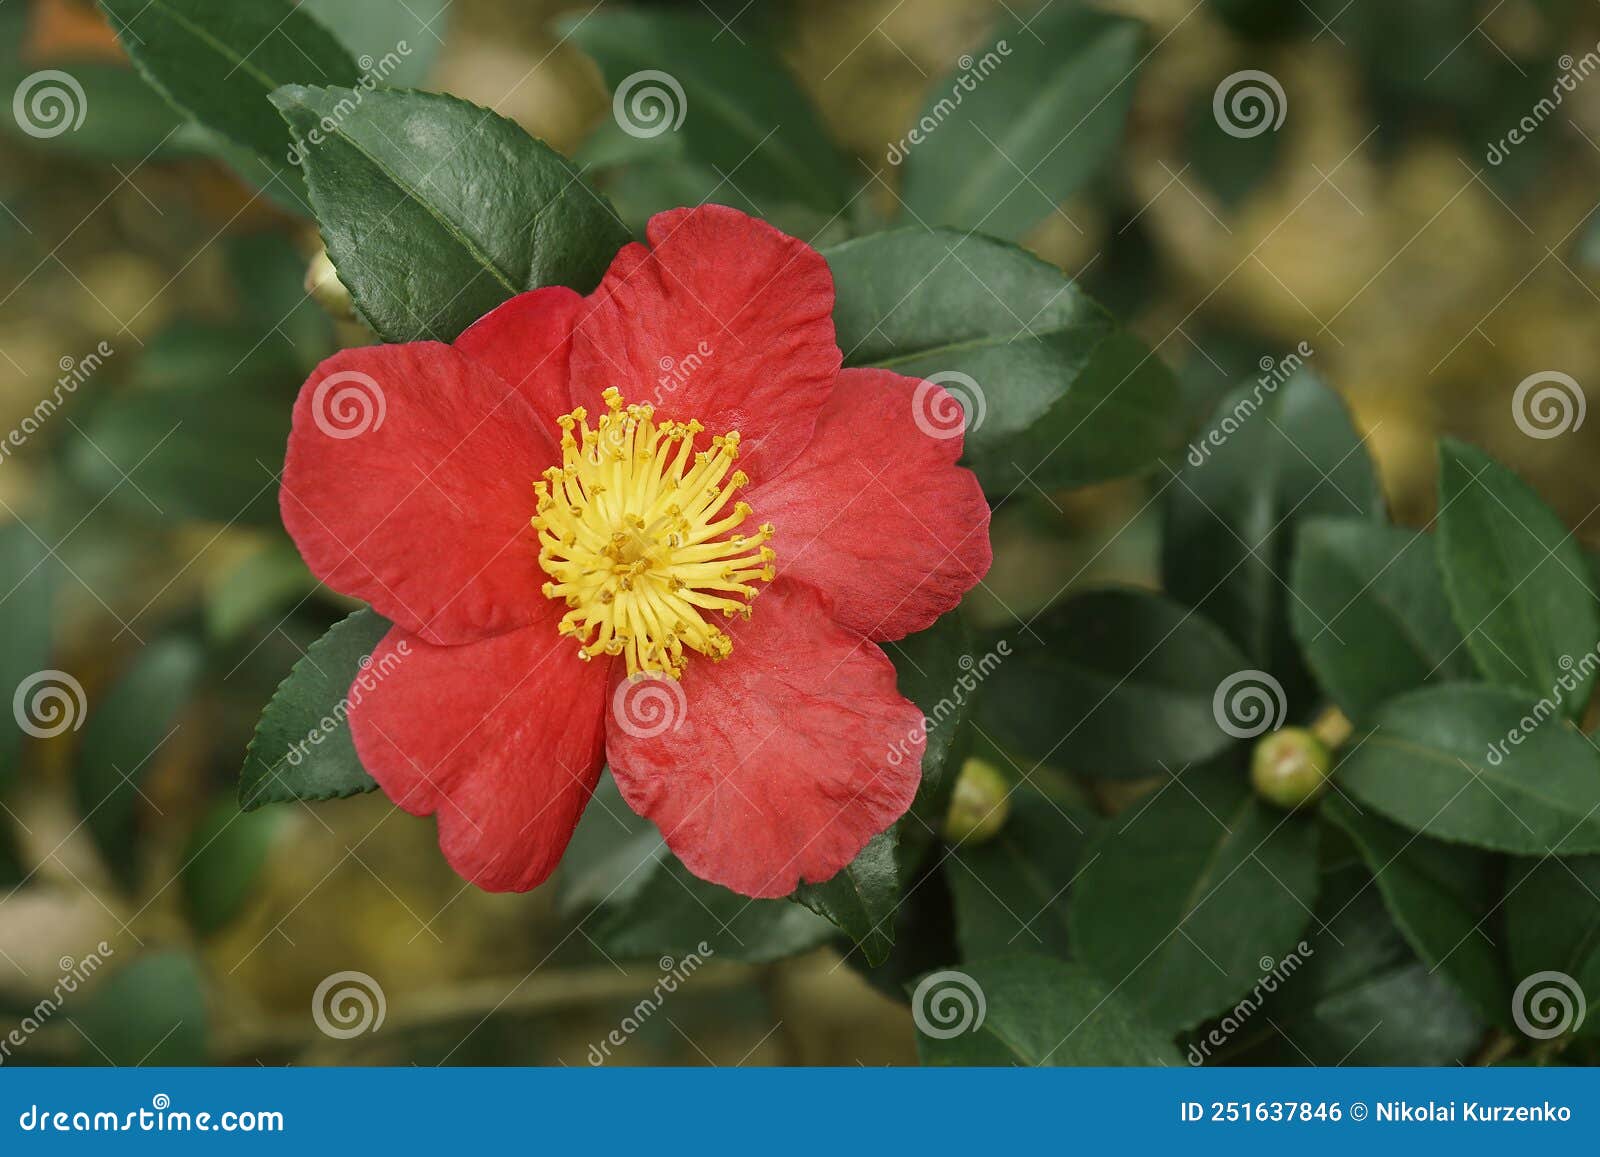 close-up image of yuletide camellia flower